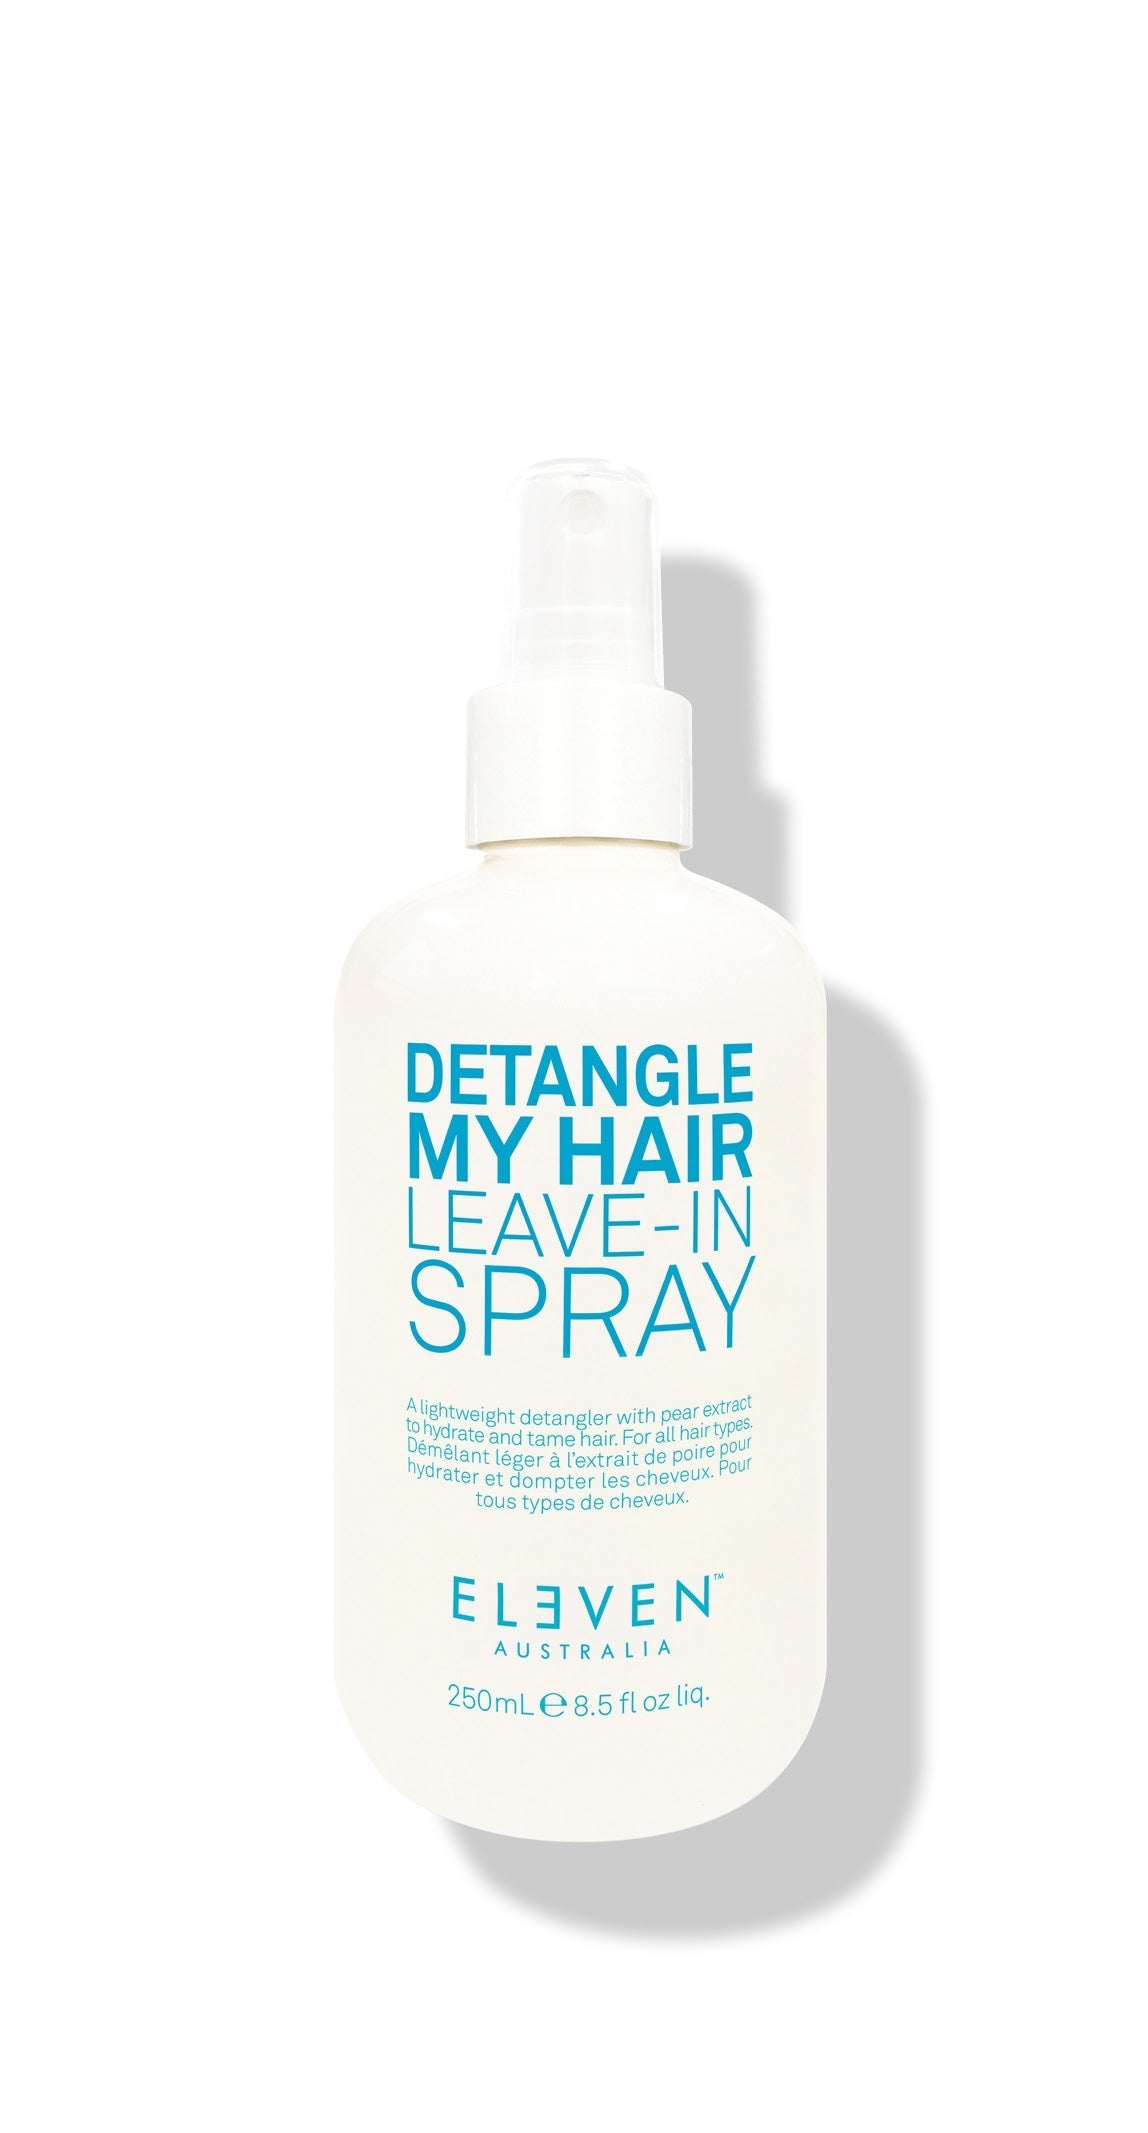 Detangle My Hair Leave In Spray    - 250ml - ELEVEN Australia